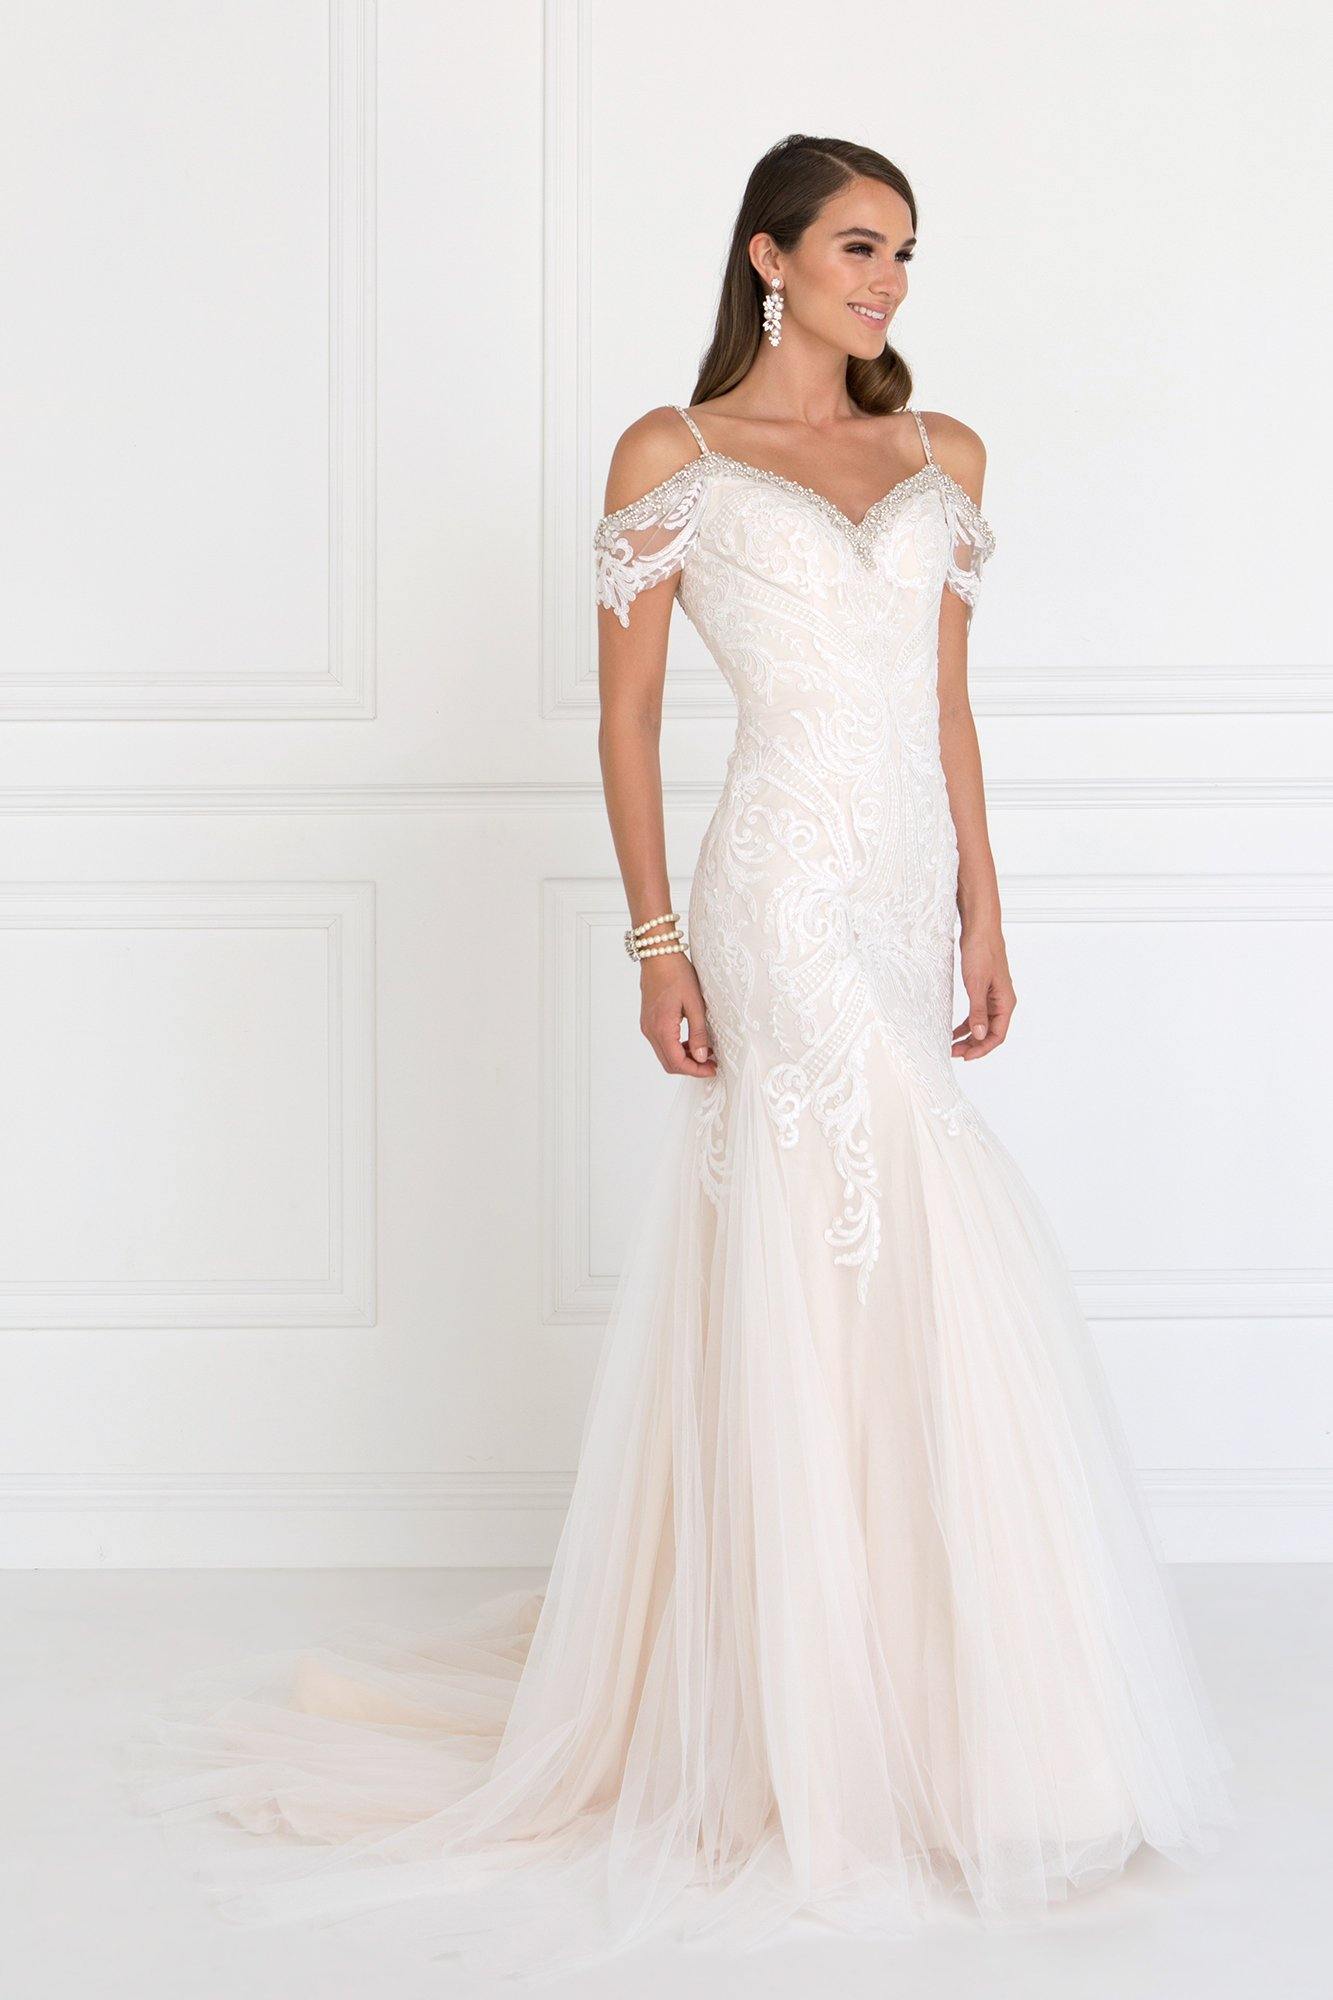 Long Wedding Dress with Lace Applique - The Dress Outlet Elizabeth K